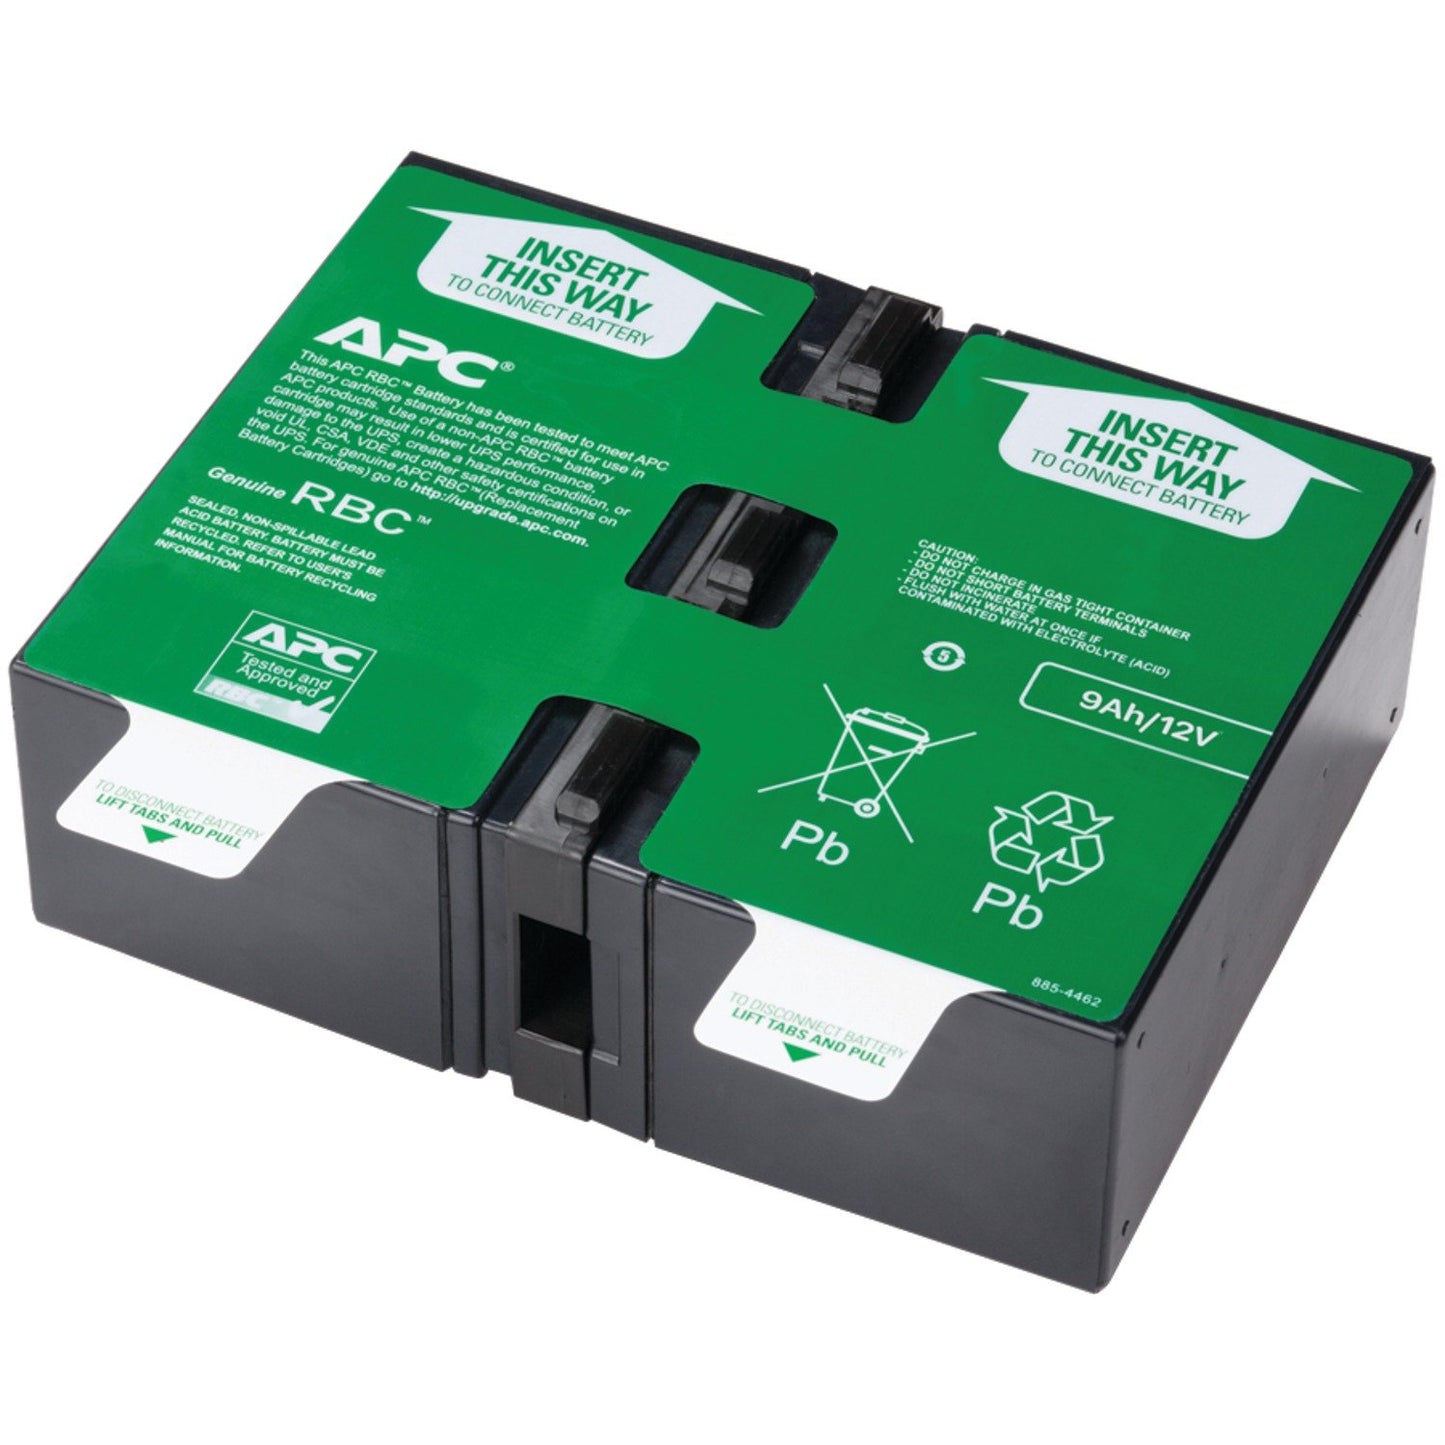 APC APCRBC124 Replacement Battery Cartridge #124